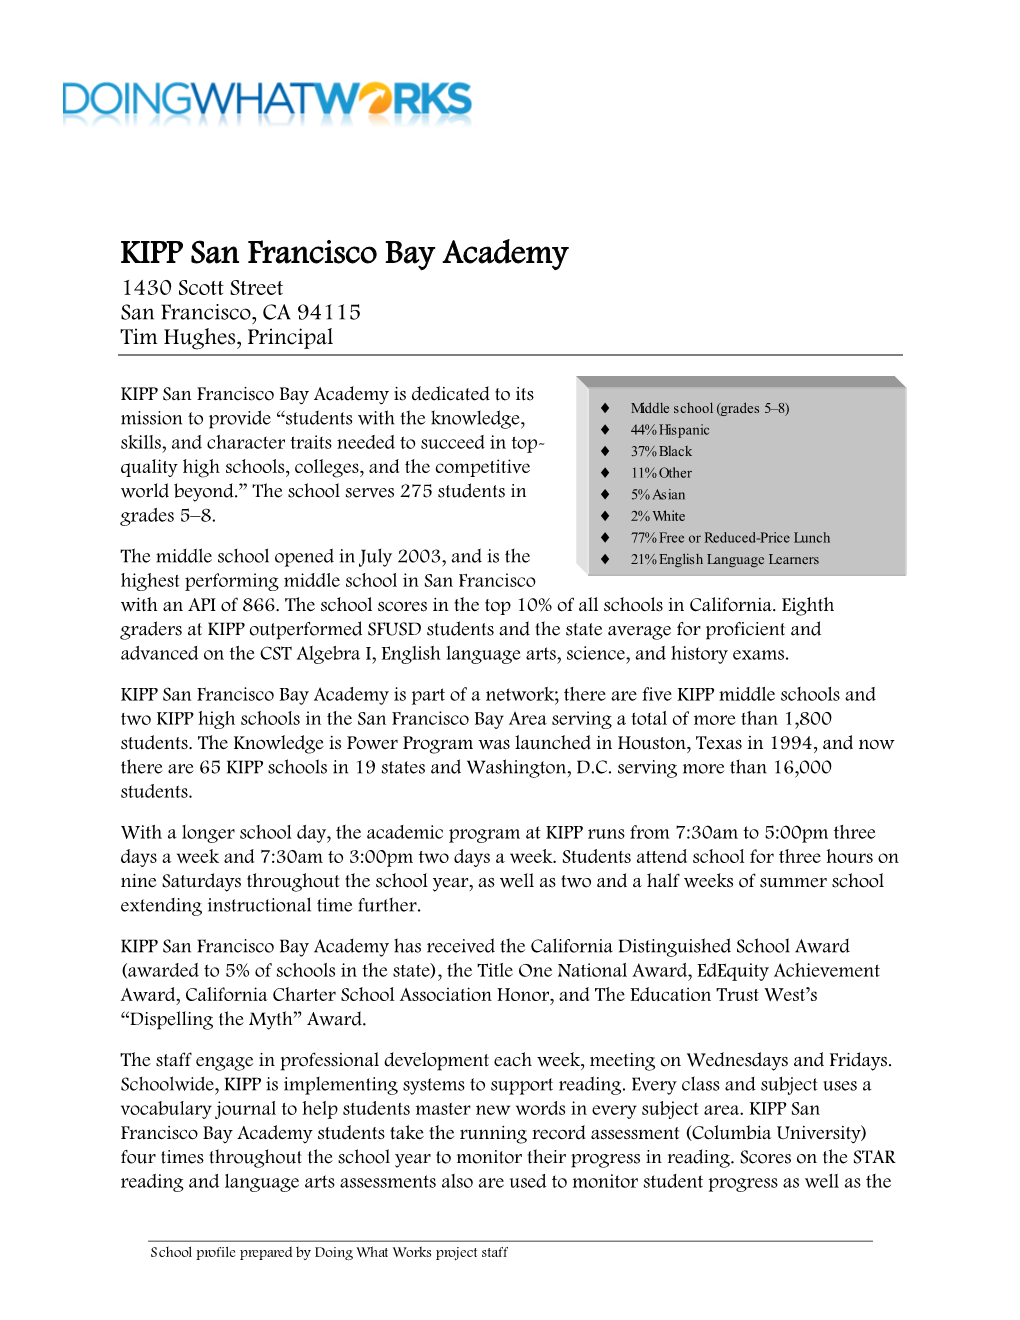 KIPP San Francisco Bay Academy School Description